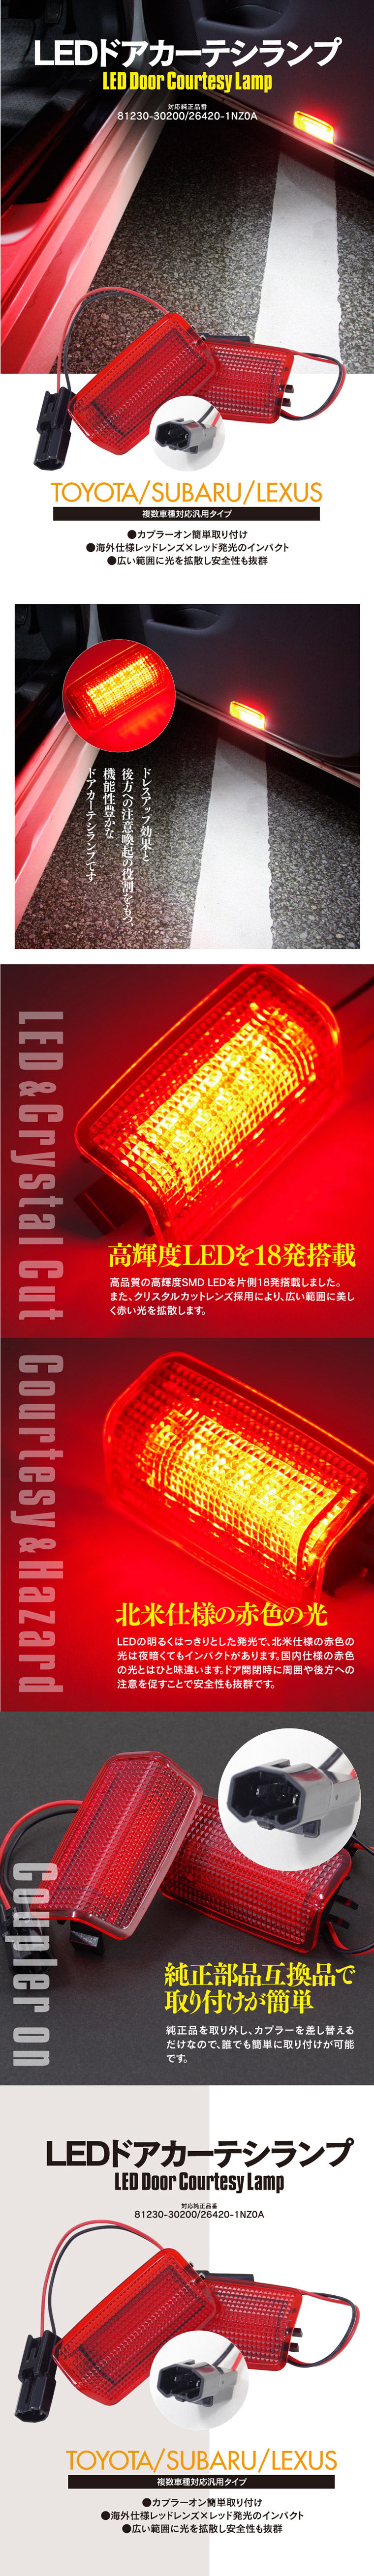 Azzurri】 LED カーテシランプ フットランプ レッド 赤 ドアランプ 50系 カムリハイブリッド 対応純正品番 81230-30200  26420-1NZ0A